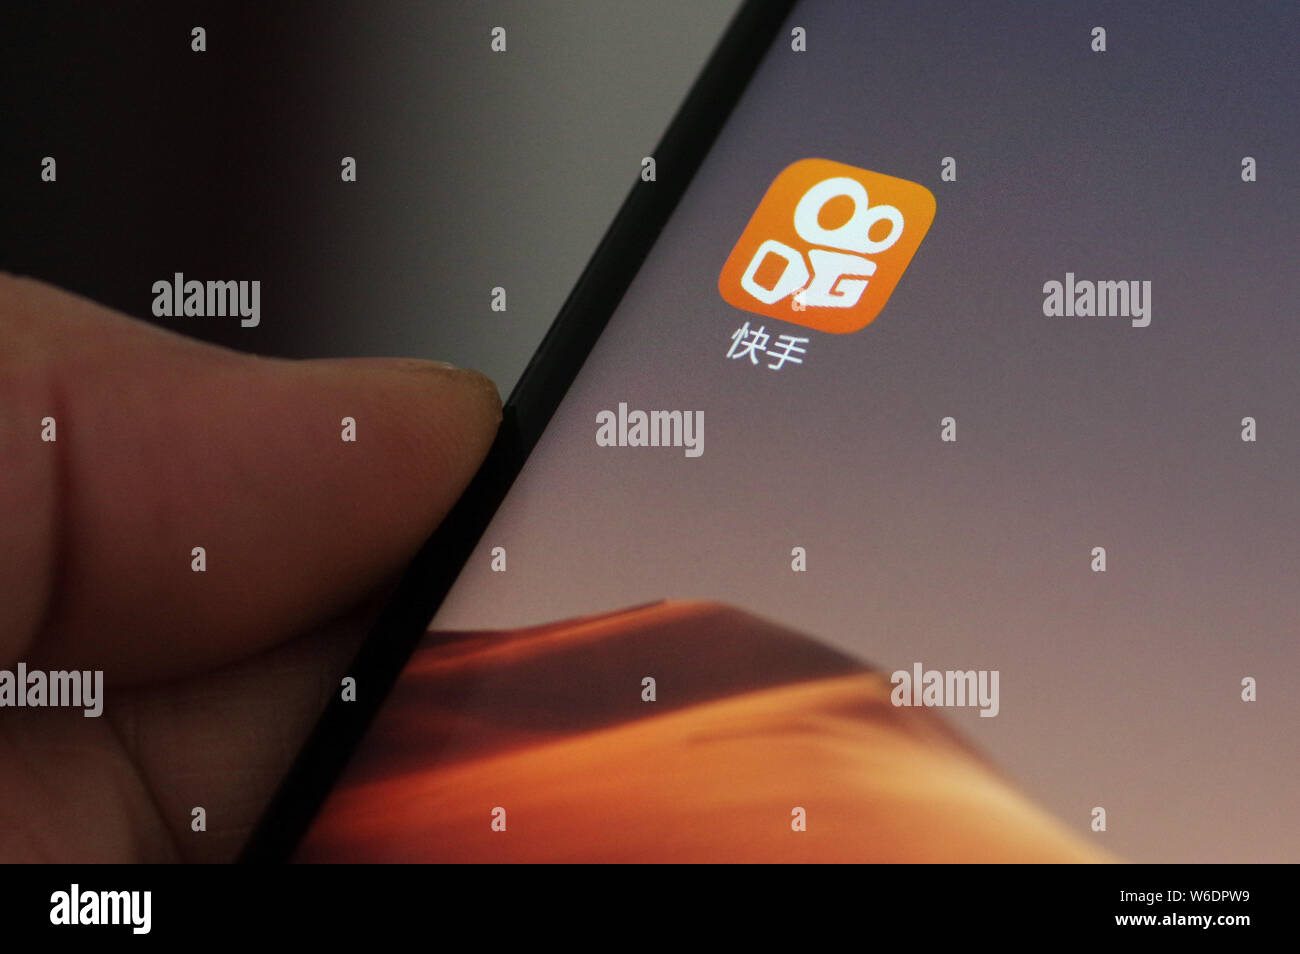 Kuaishou Lite App Download  快手极速版 Faster Kwai China - CN App Store